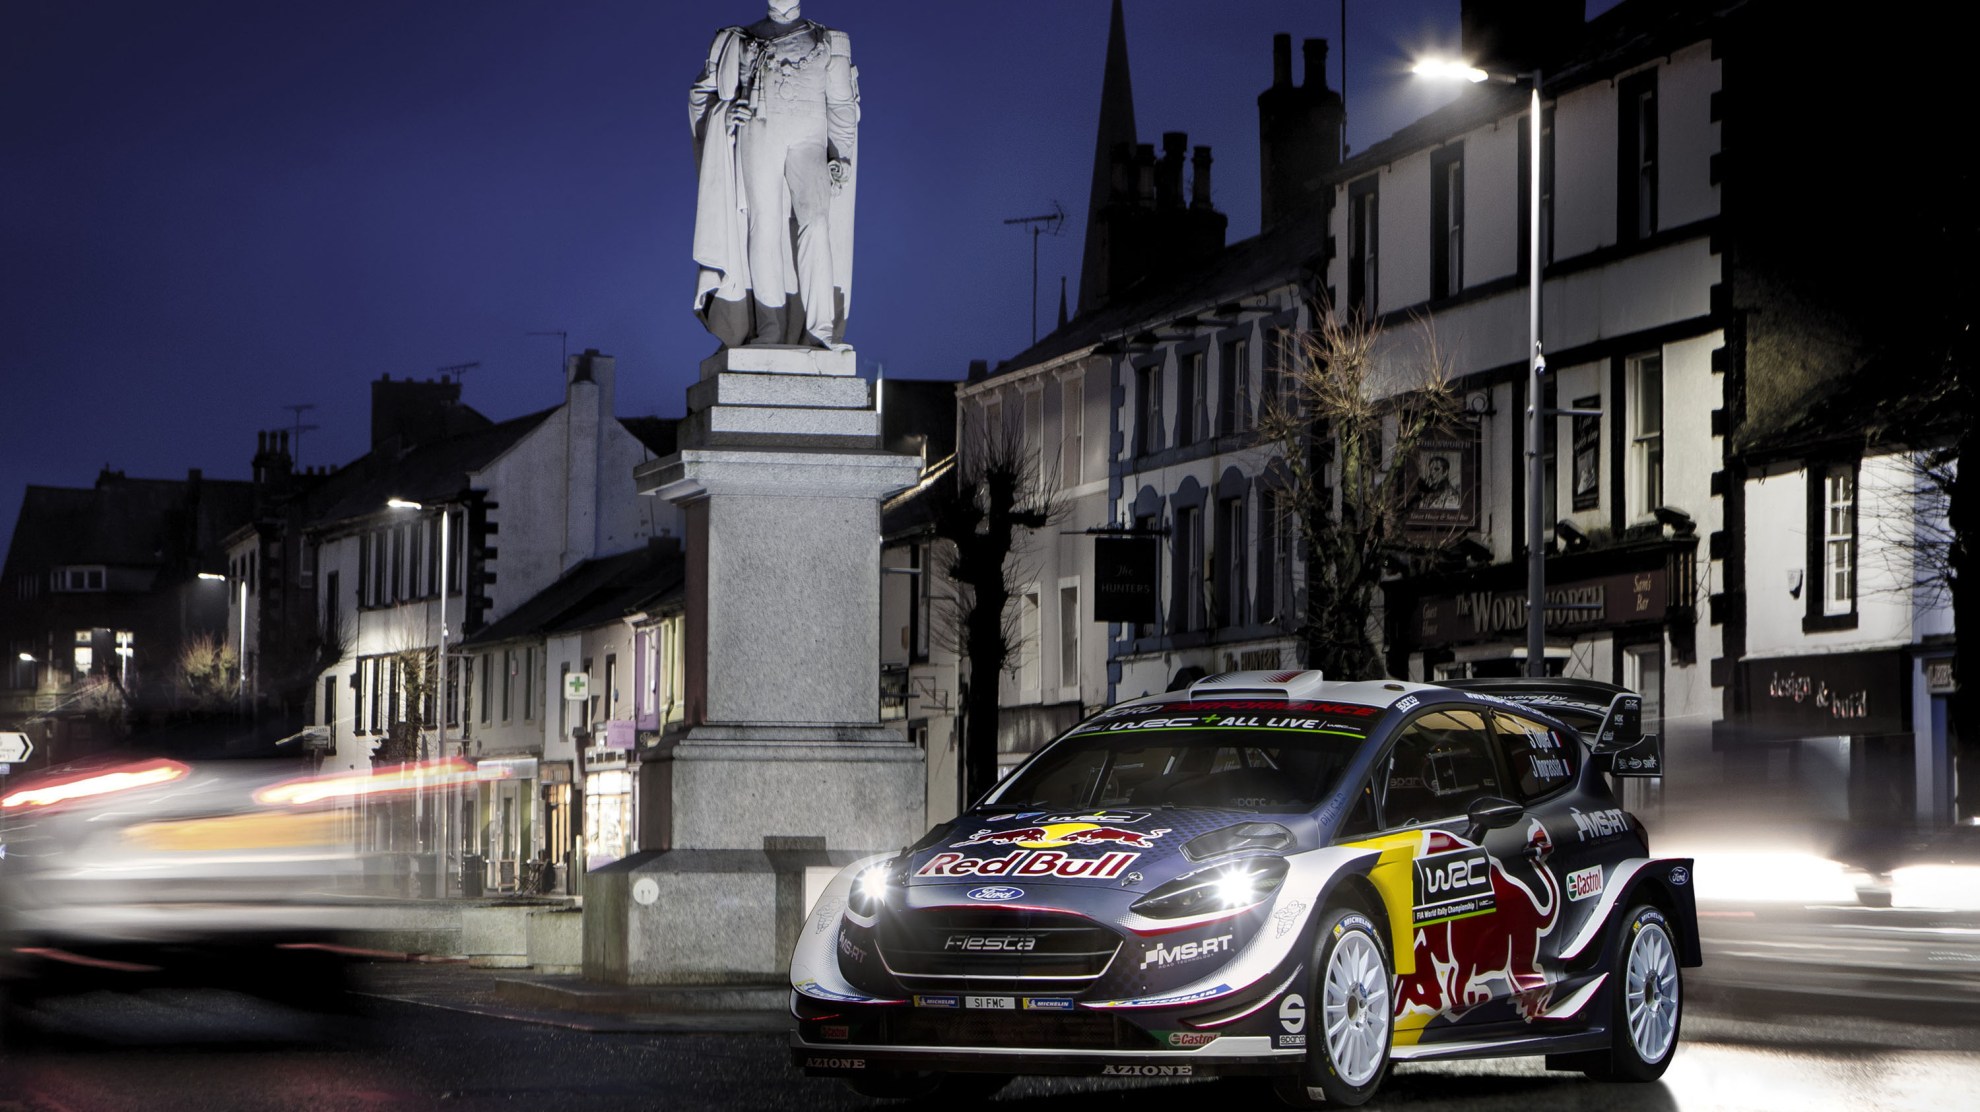 Ford brani naziv prvaka FIA WRC